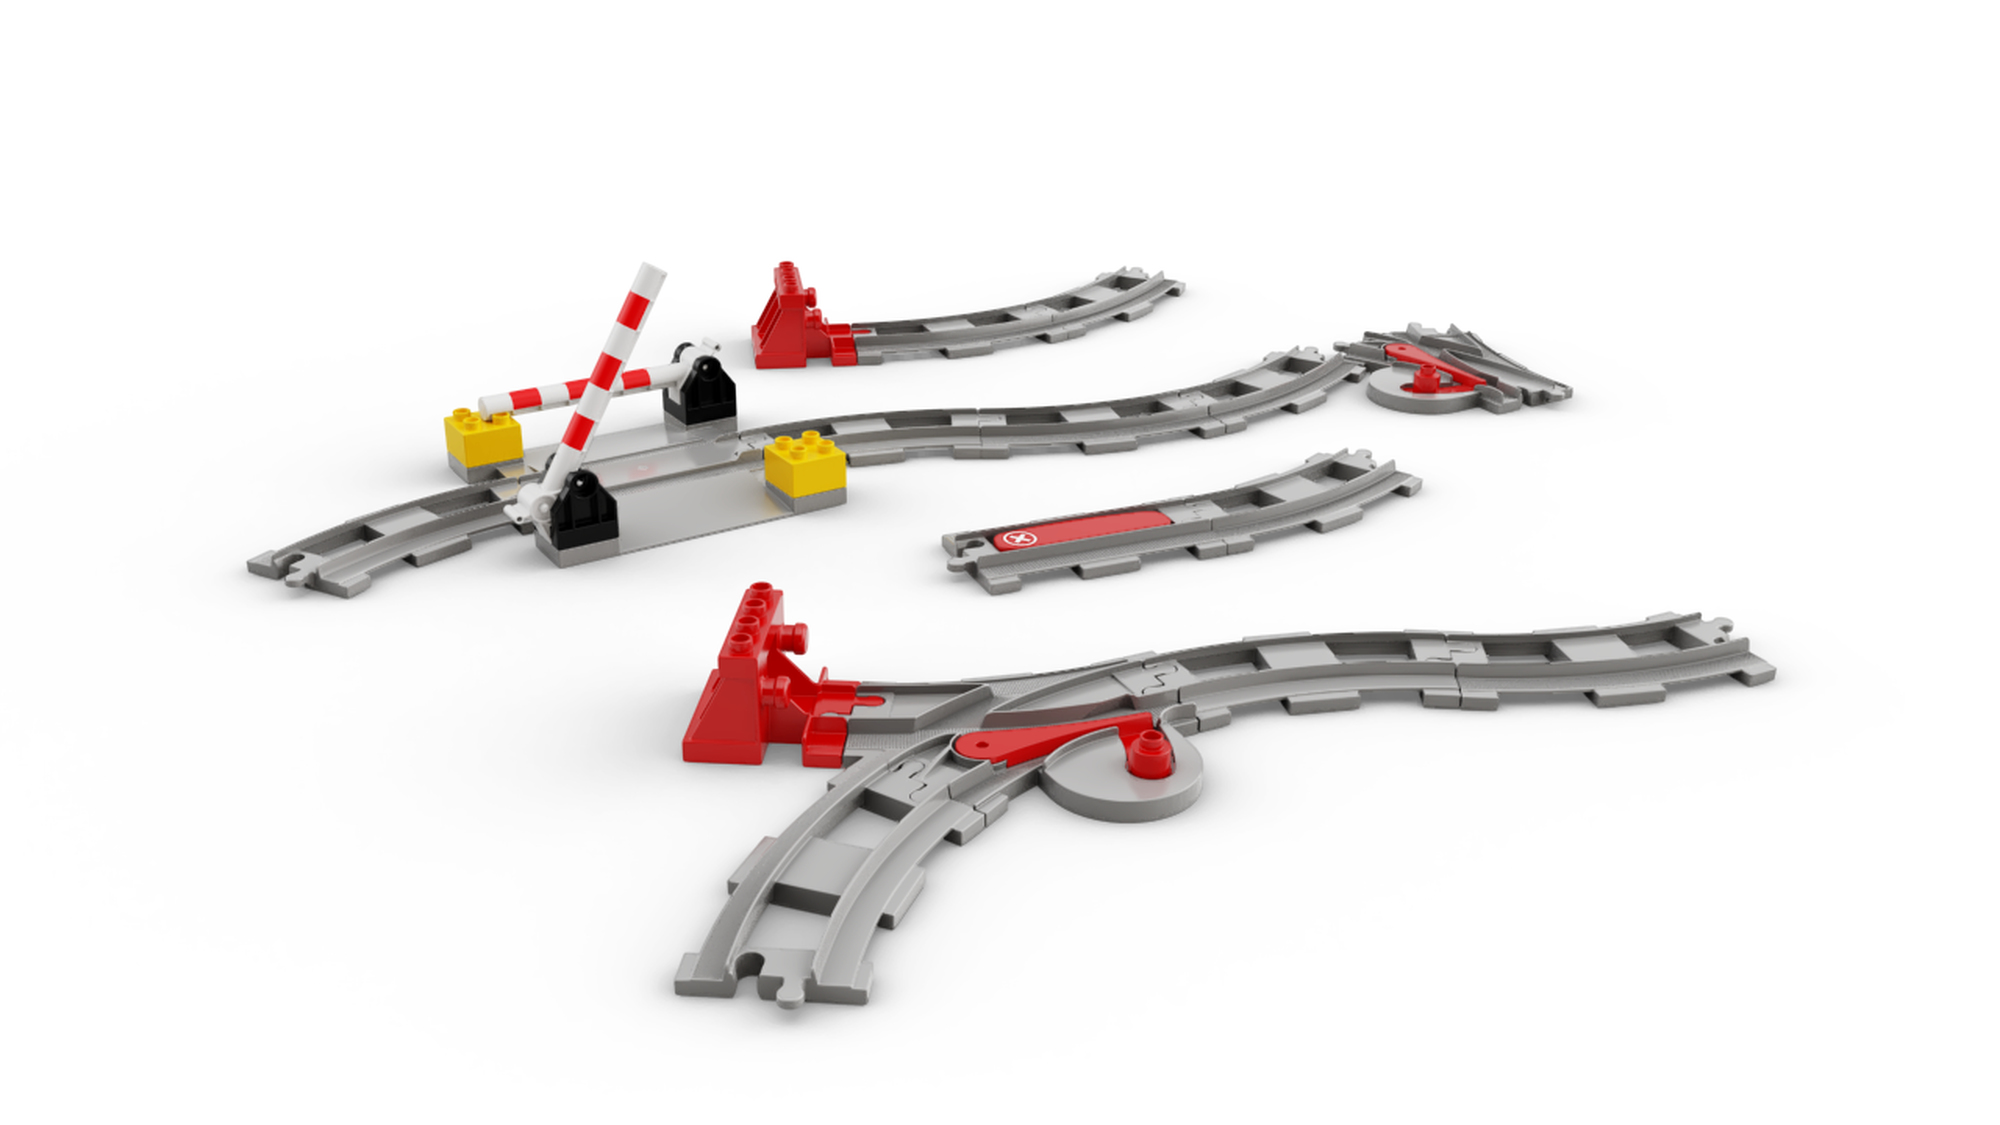 LEGO DUPLO 10882 TRAIN TRACKS